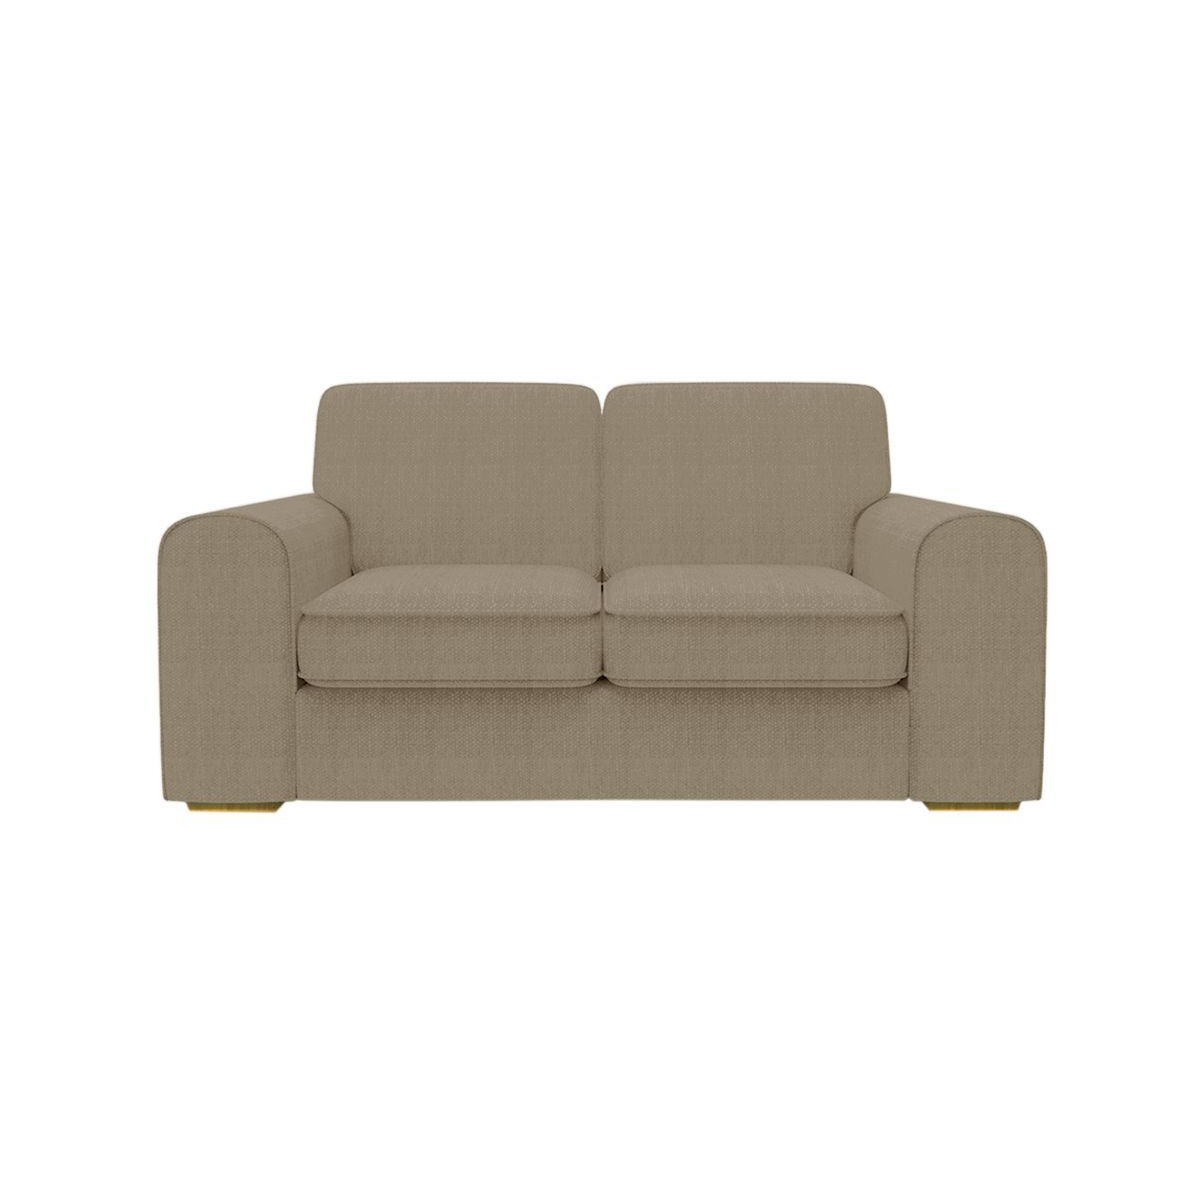 Colista 2 Seater Sofa, beige - image 1